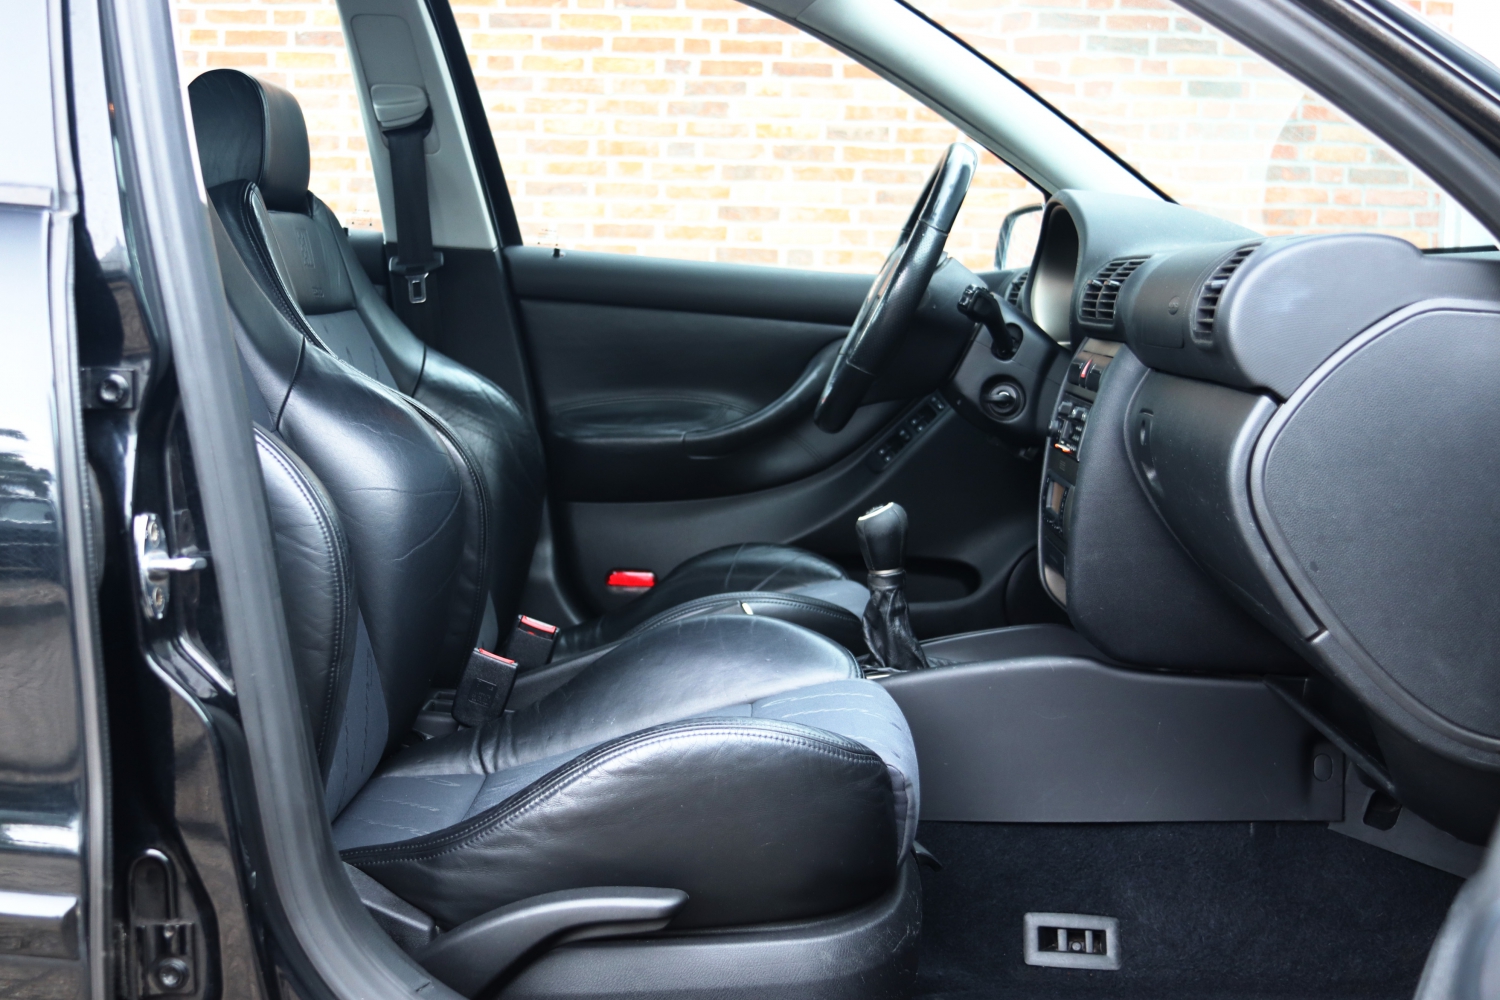 Seat-Leon-Cupra-V6-4X4-38HJFZ-043.JPG